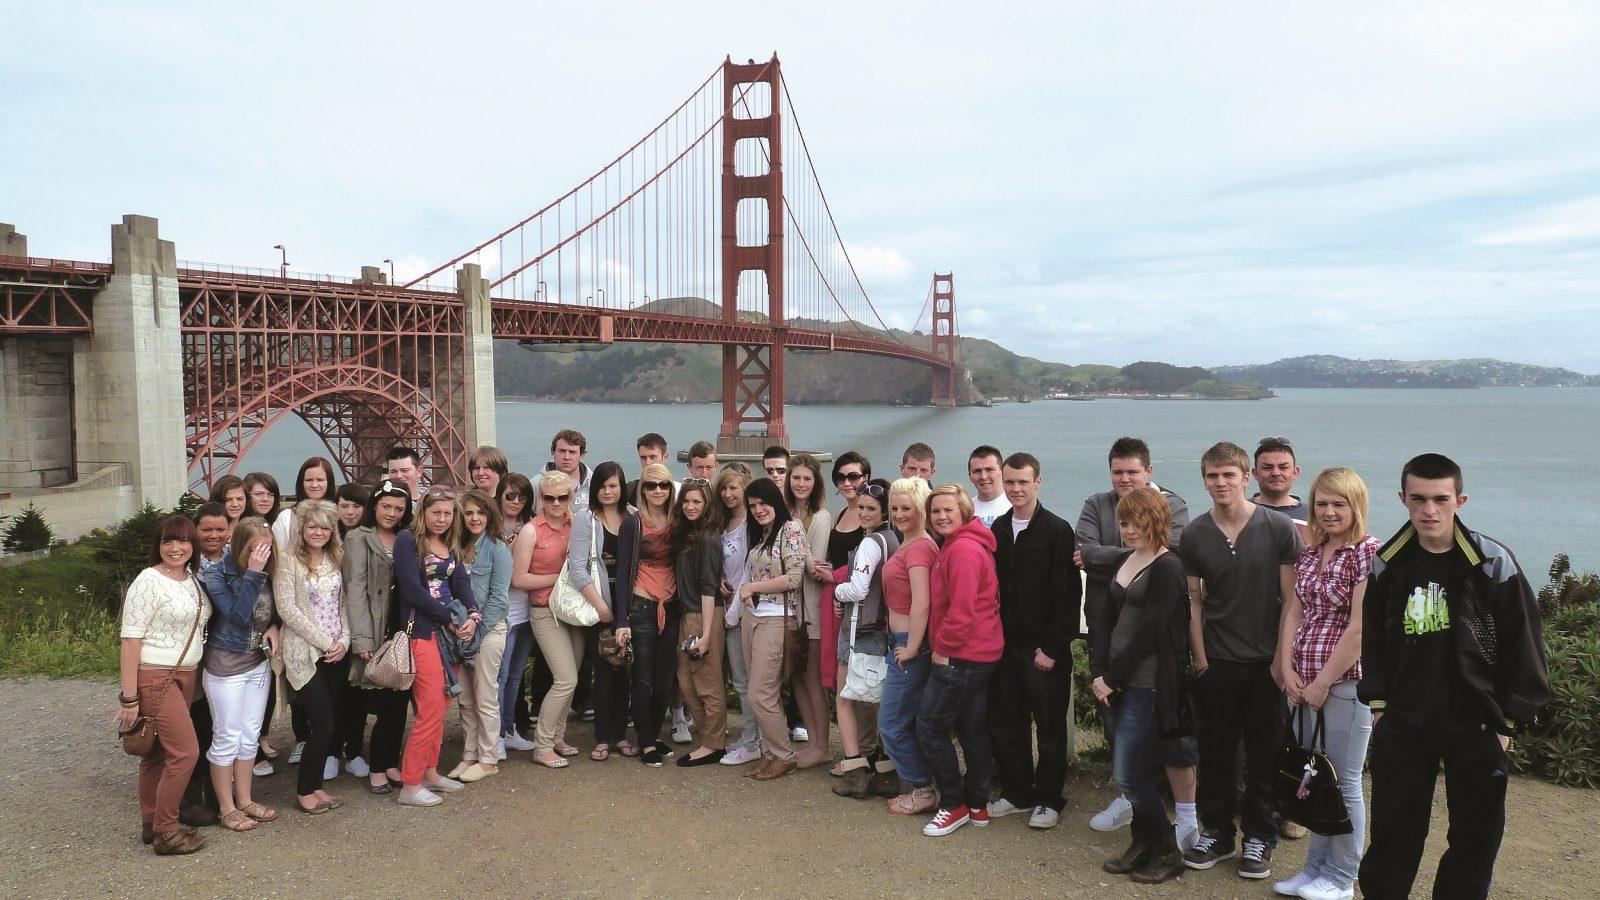 School Trip To San Francisco For Science | STEM1600 x 900